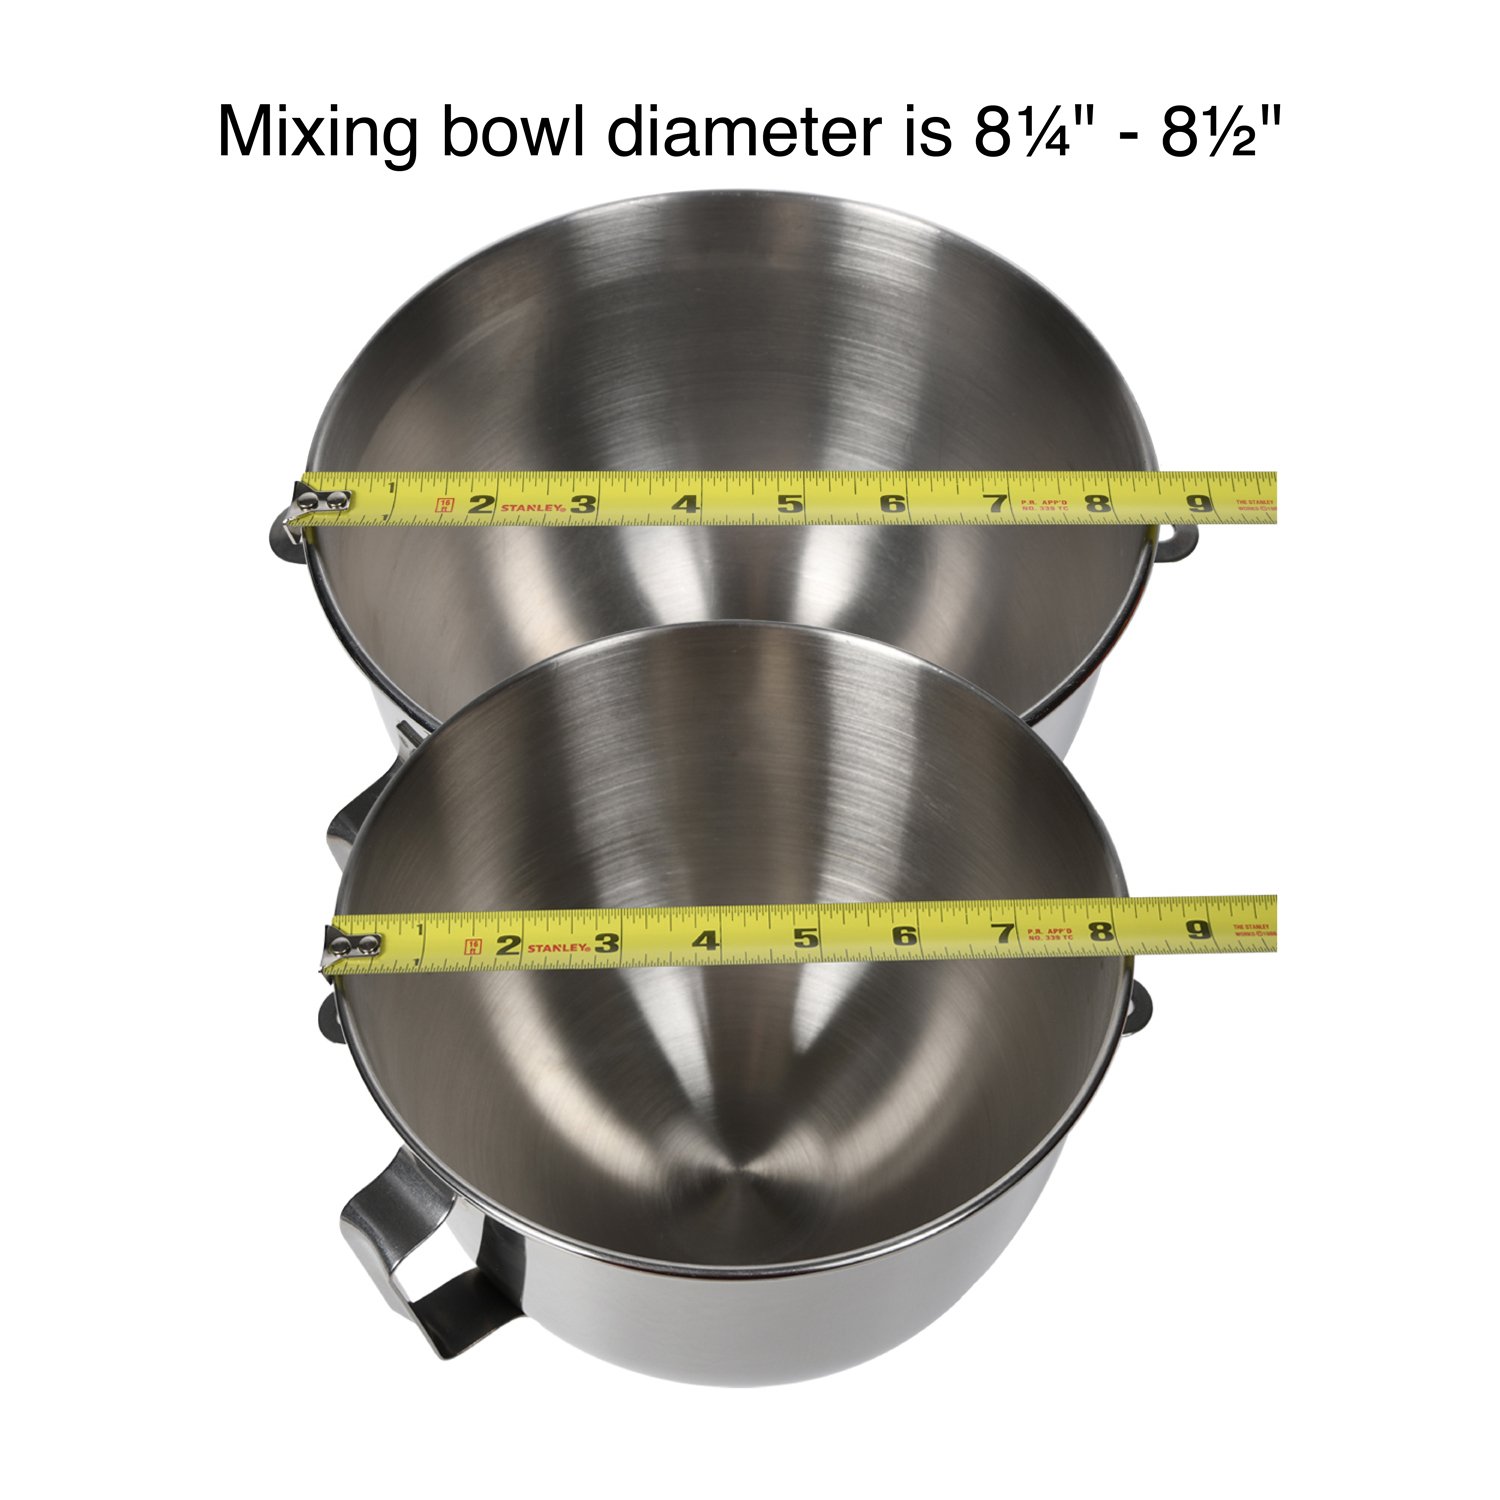 Plastic Frame KA-5L BeaterBlade / Fits KitchenAid Bowl-Lift Mixer 5-QT  mixer / Bowl Diameter up to 8.5 — BeaterBlade